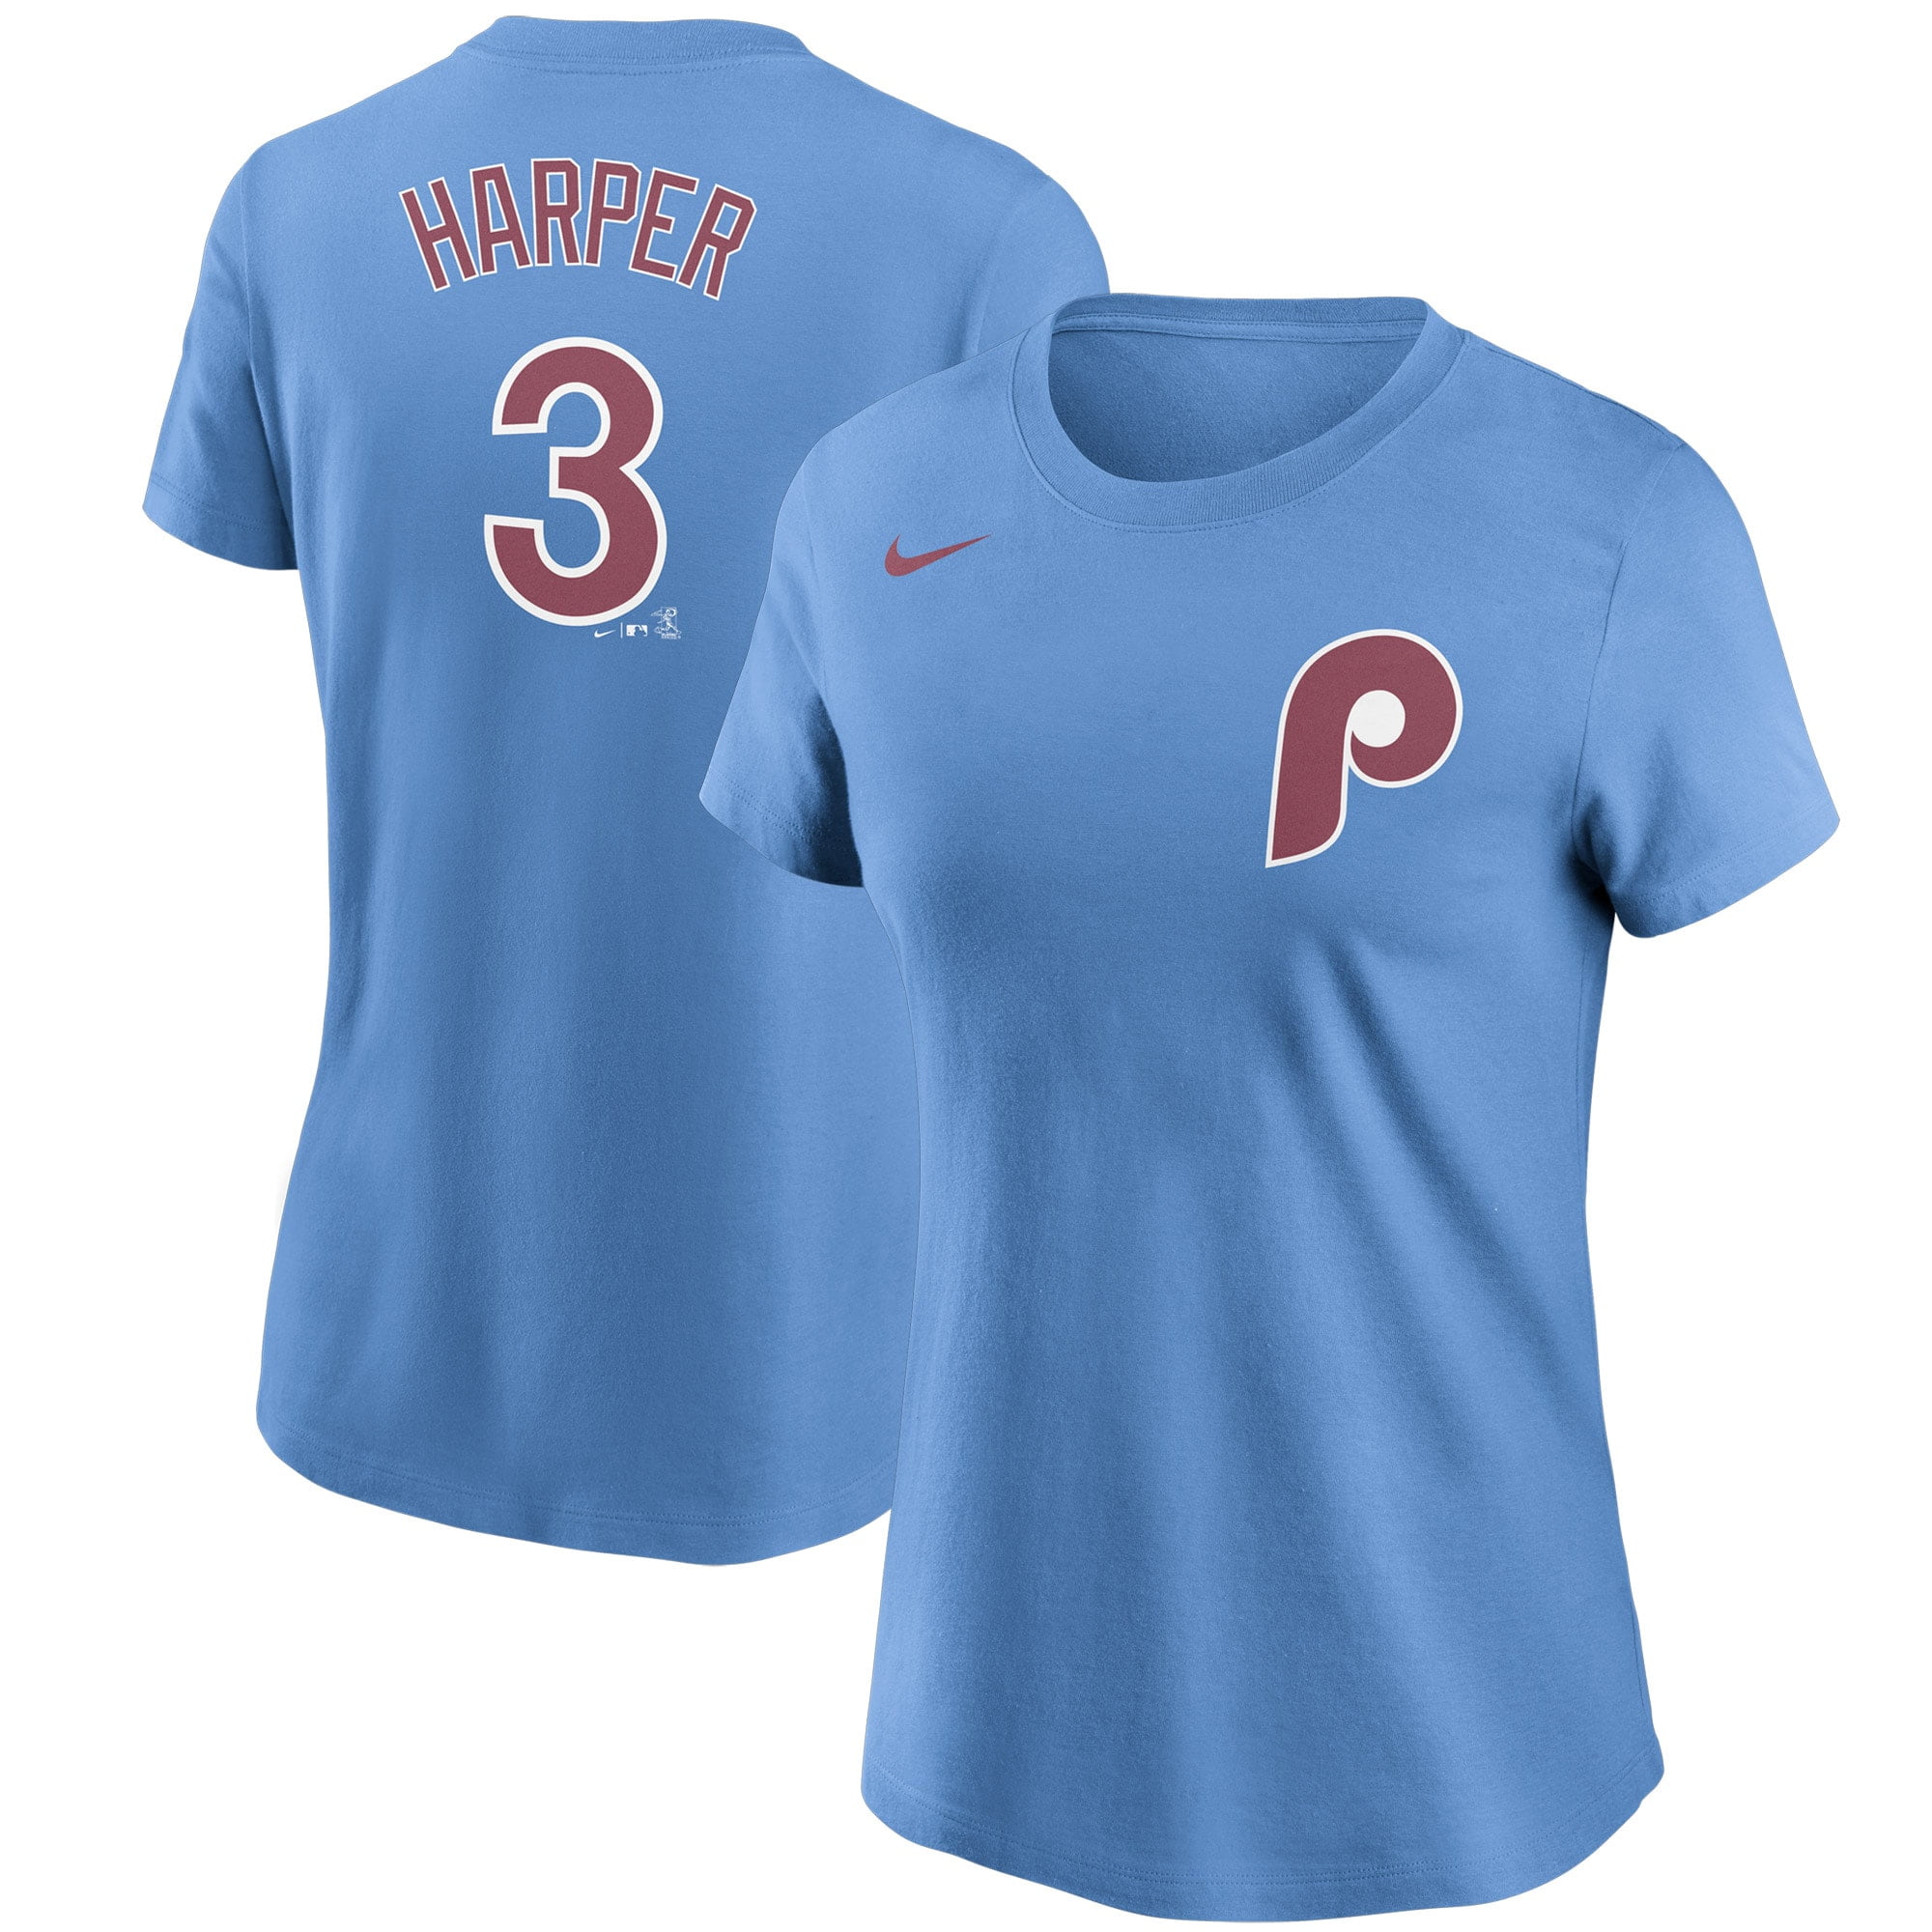 3 Phillies Baseball Jersey Fan Version Casual Personality Sports Uniform Shirt Button Cardigan Shirt S-3XL DWQ Harper Mens Jerseys 